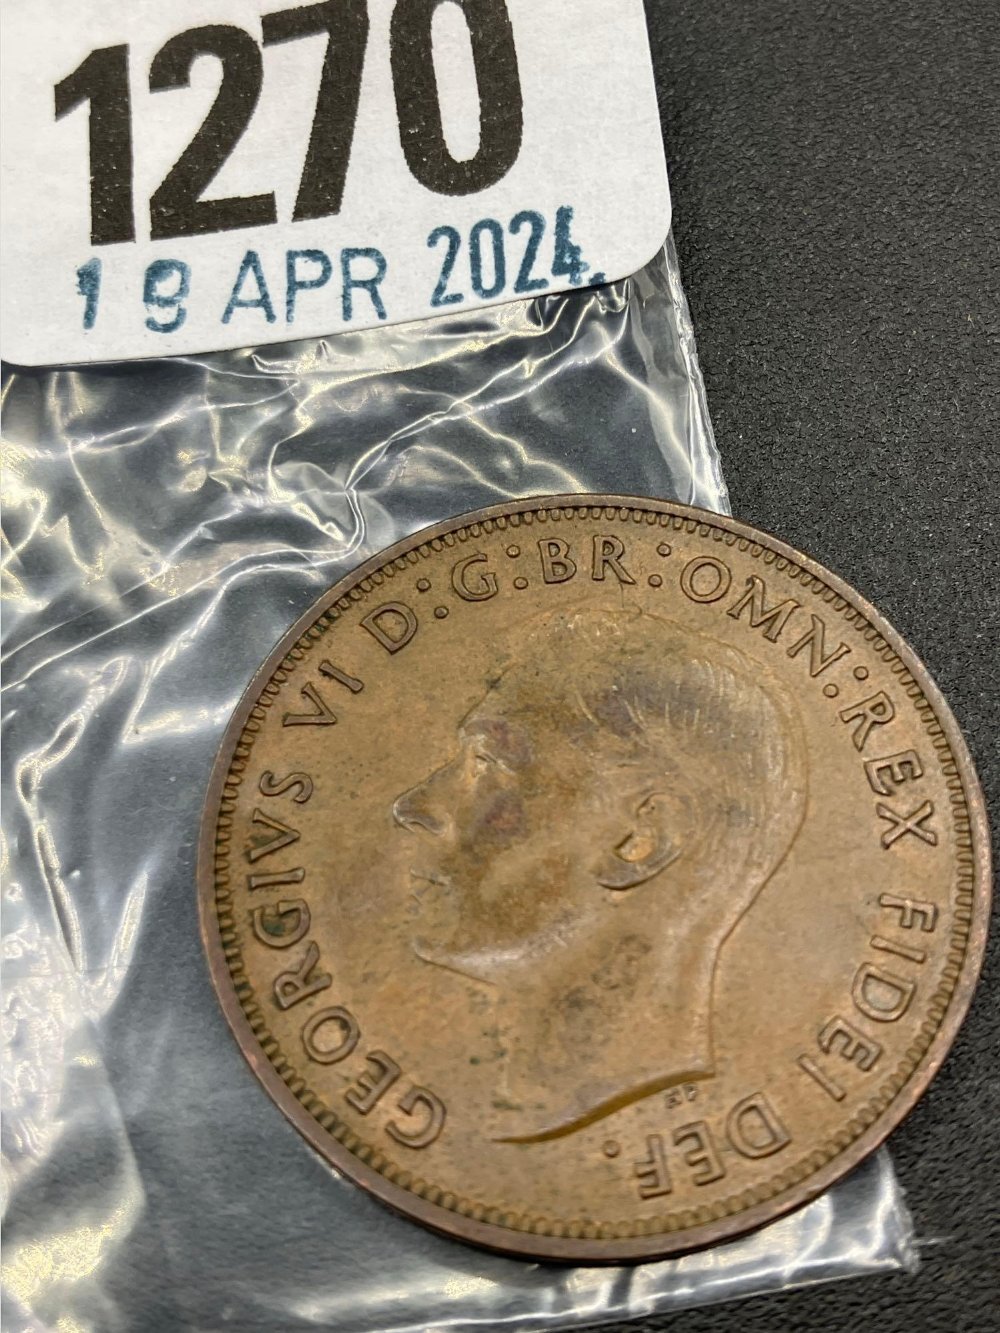 Scarce 1950 penny